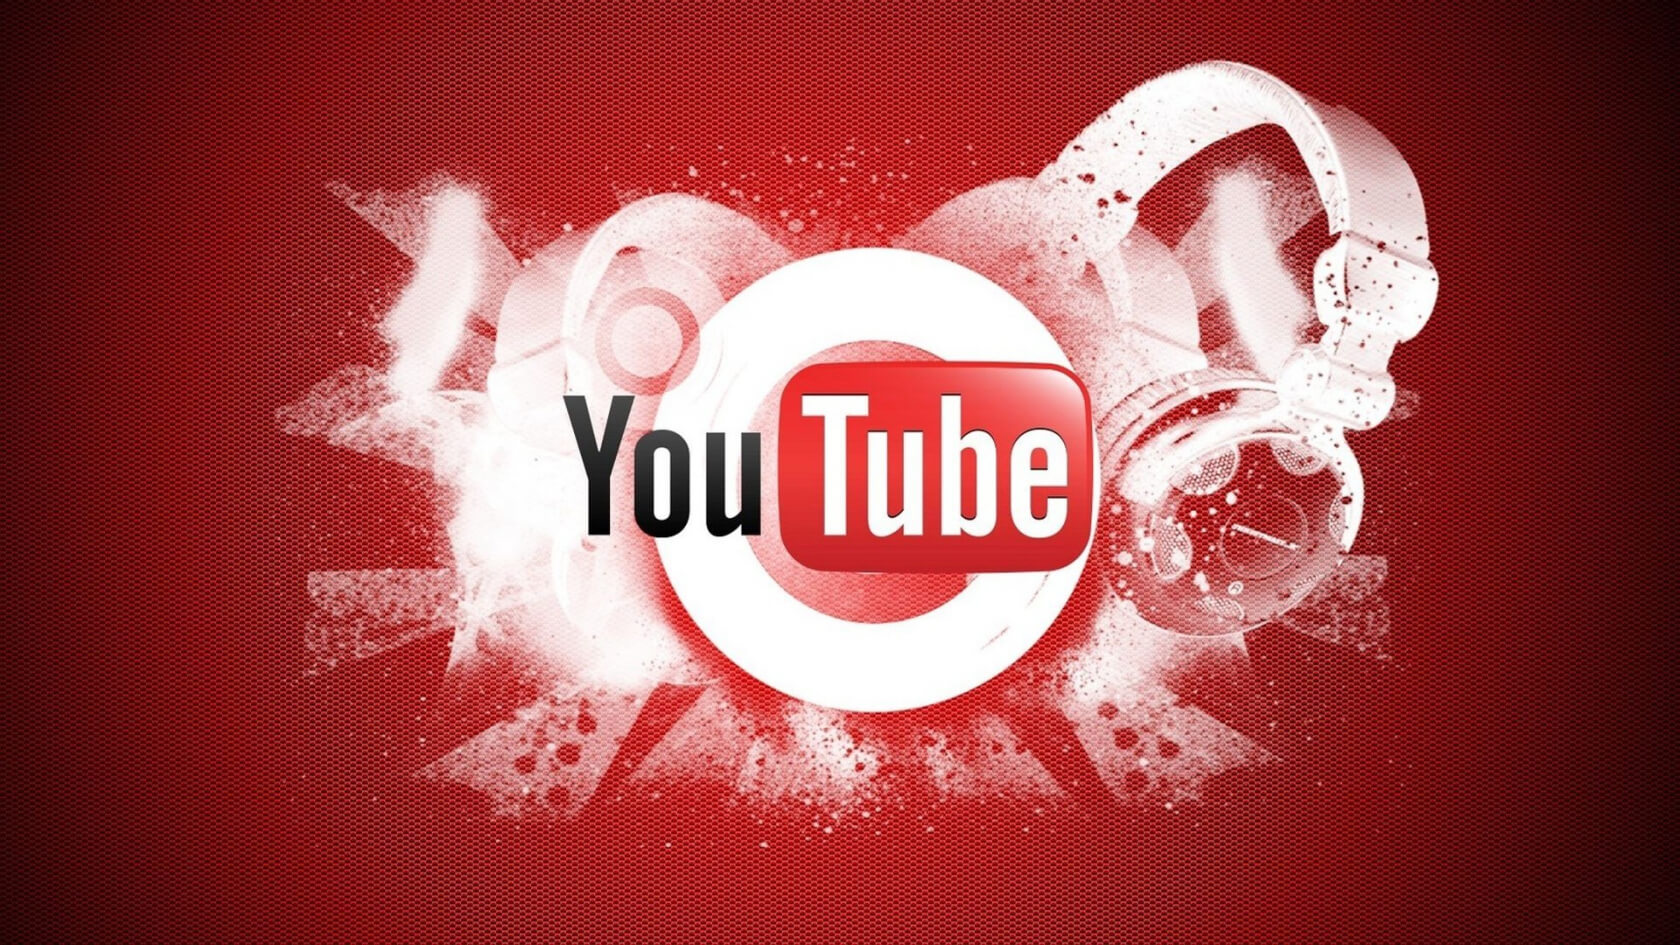 YouTube lets creators make extra money through Membership programs and merchandising